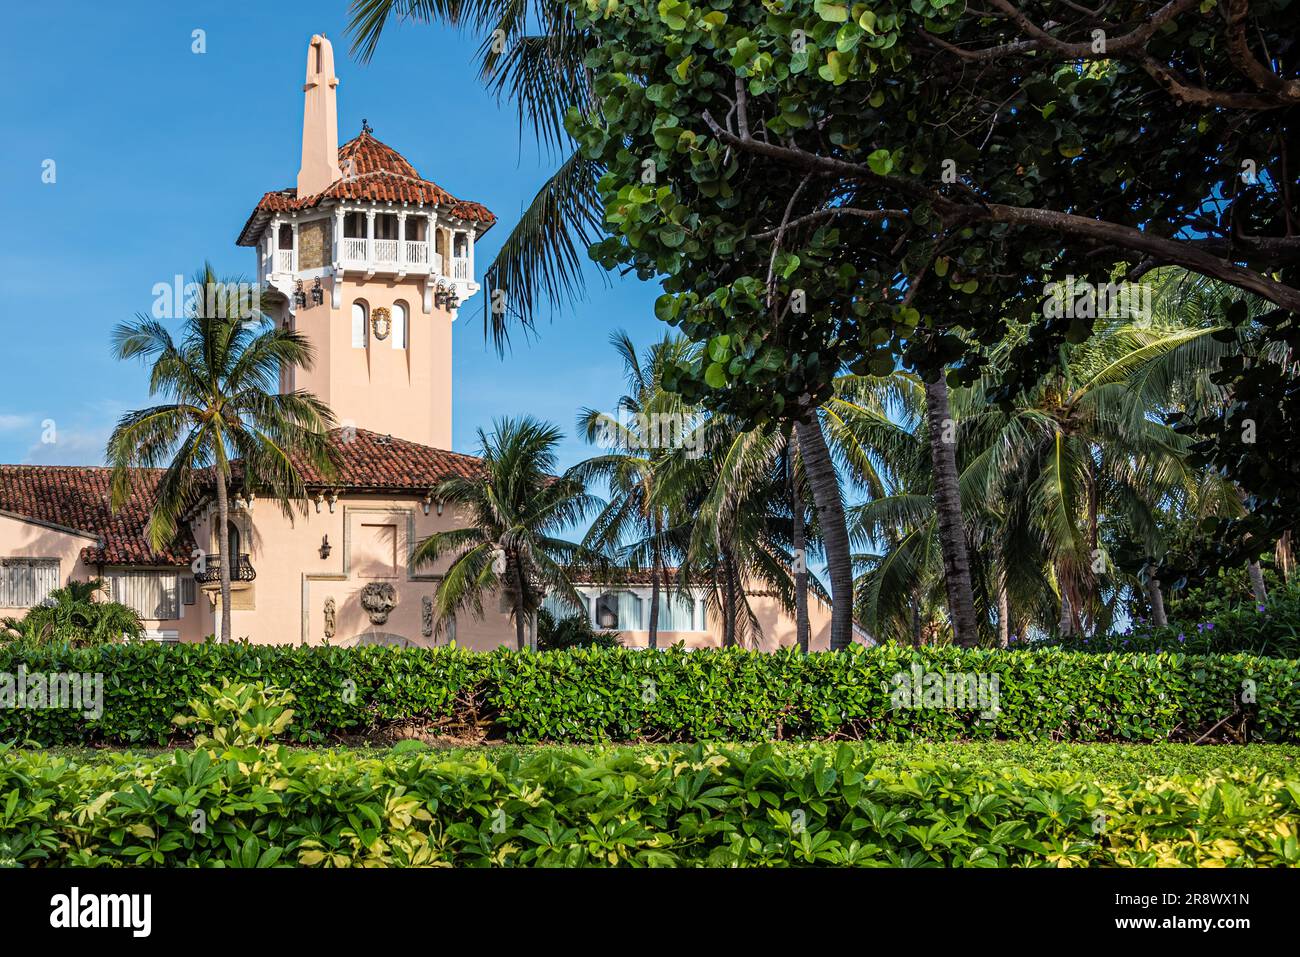 Mar-a-Lago, the Palm Beach, Florida, estate of President Donald Trump. (USA) Stock Photo